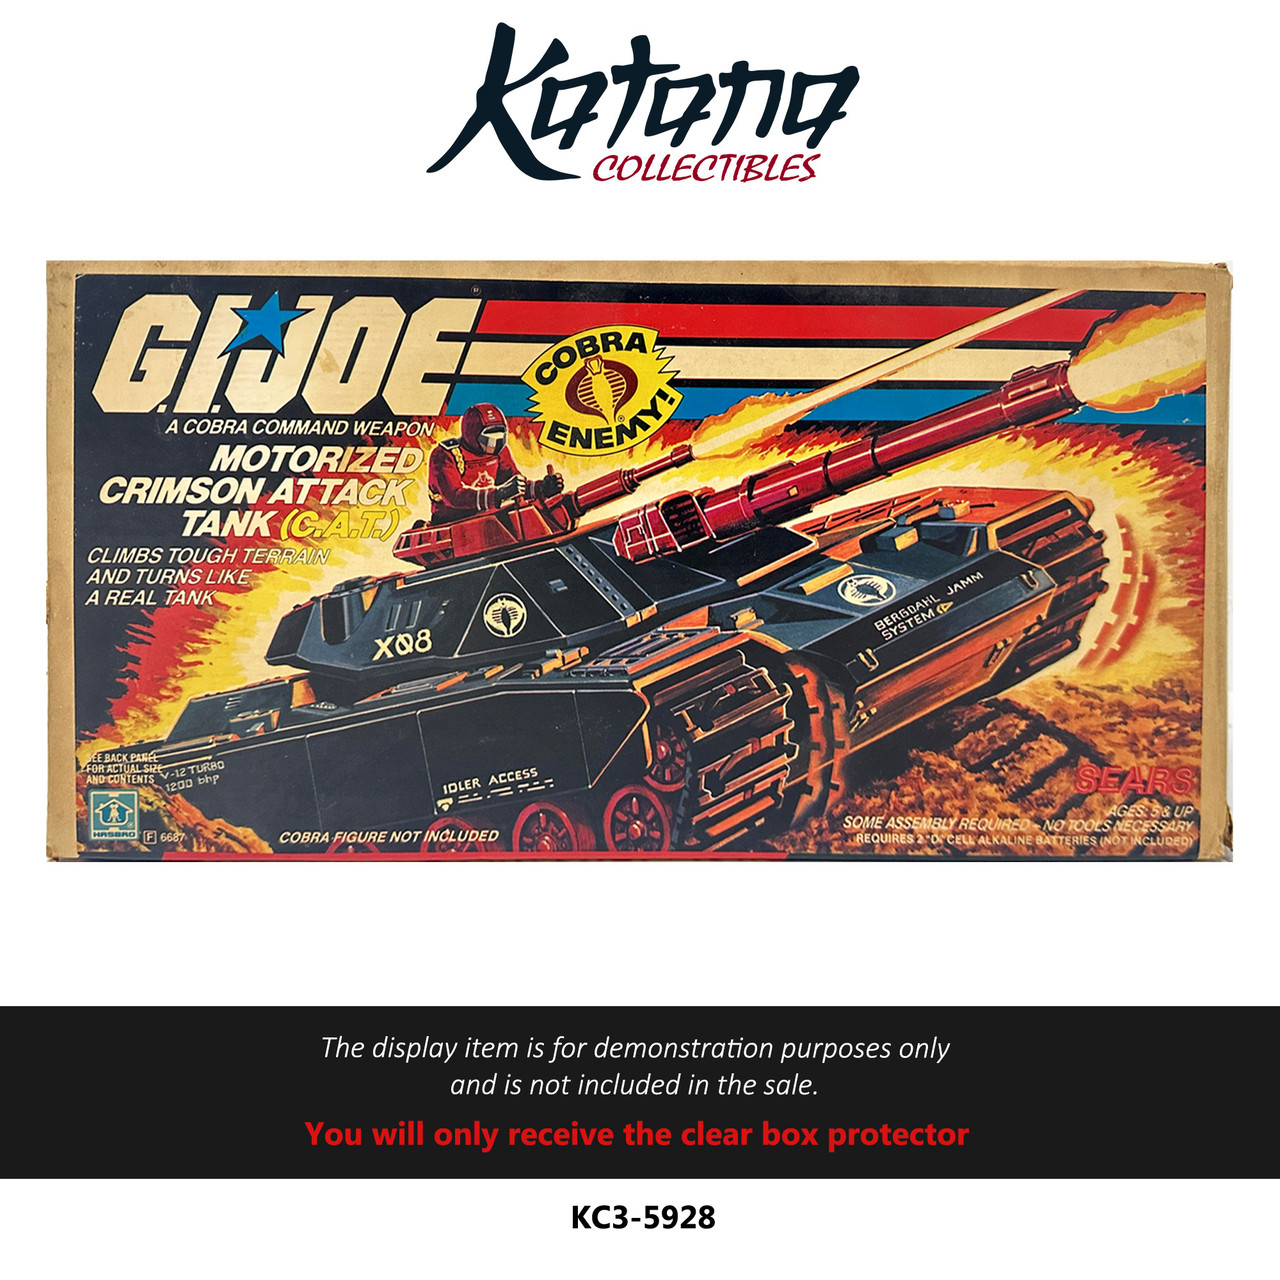 Katana Collectibles Protector For G.i. Joe Sears CAT Motorized Crimson Attack Tank